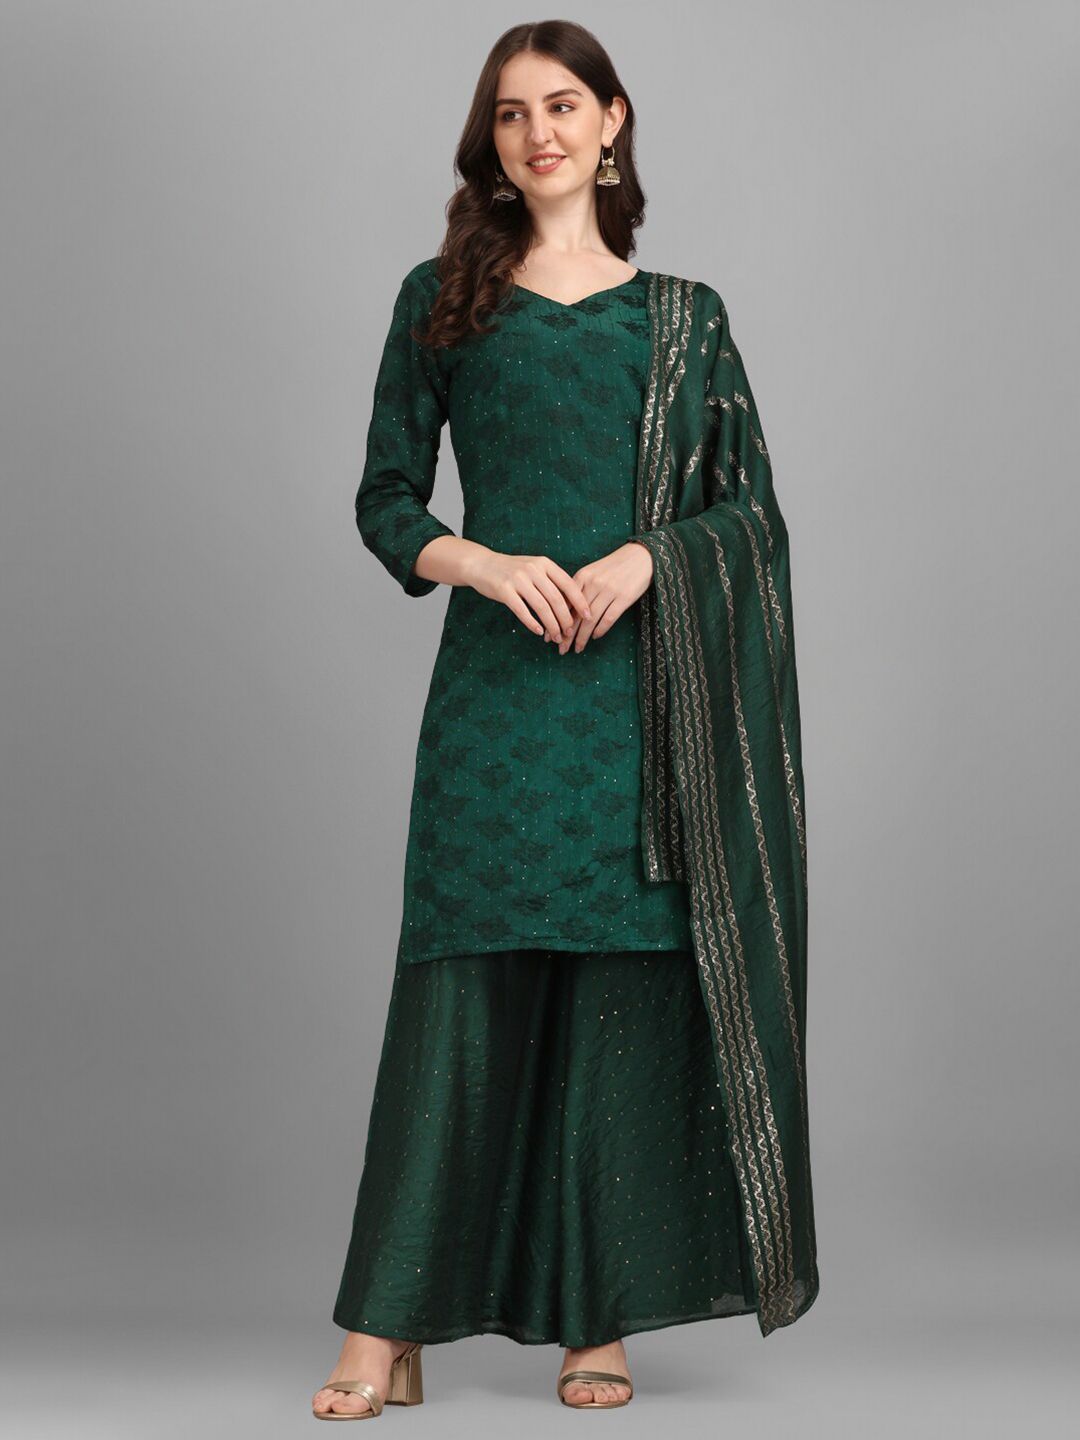 JATRIQQ Green Art Silk Semi-Stitched Dress Material Price in India